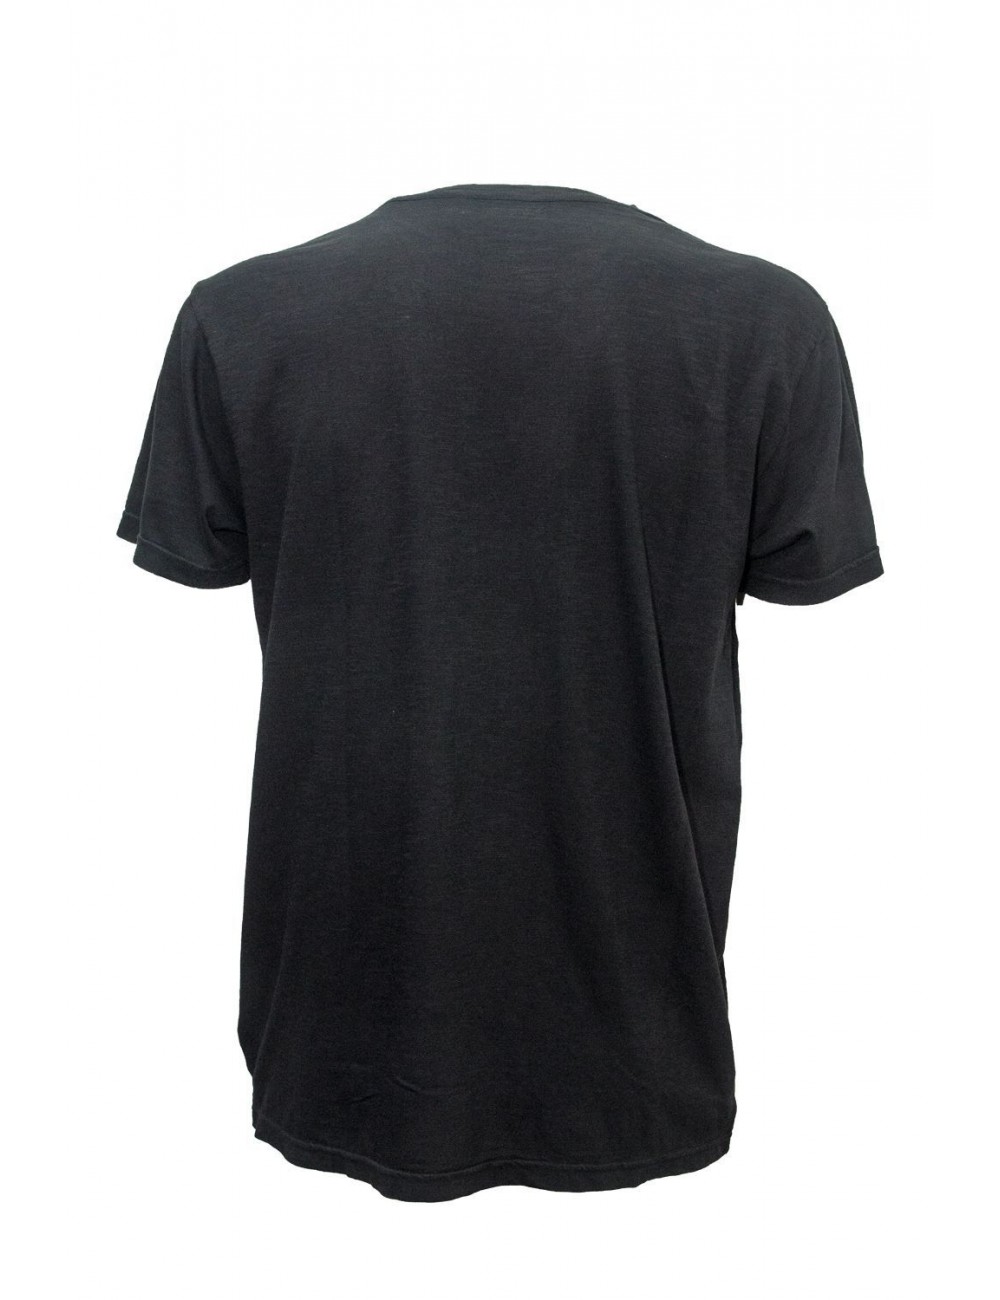 t-shirt censured UOMO BLACK - TM 3556 T JSSG 90 vista frontale